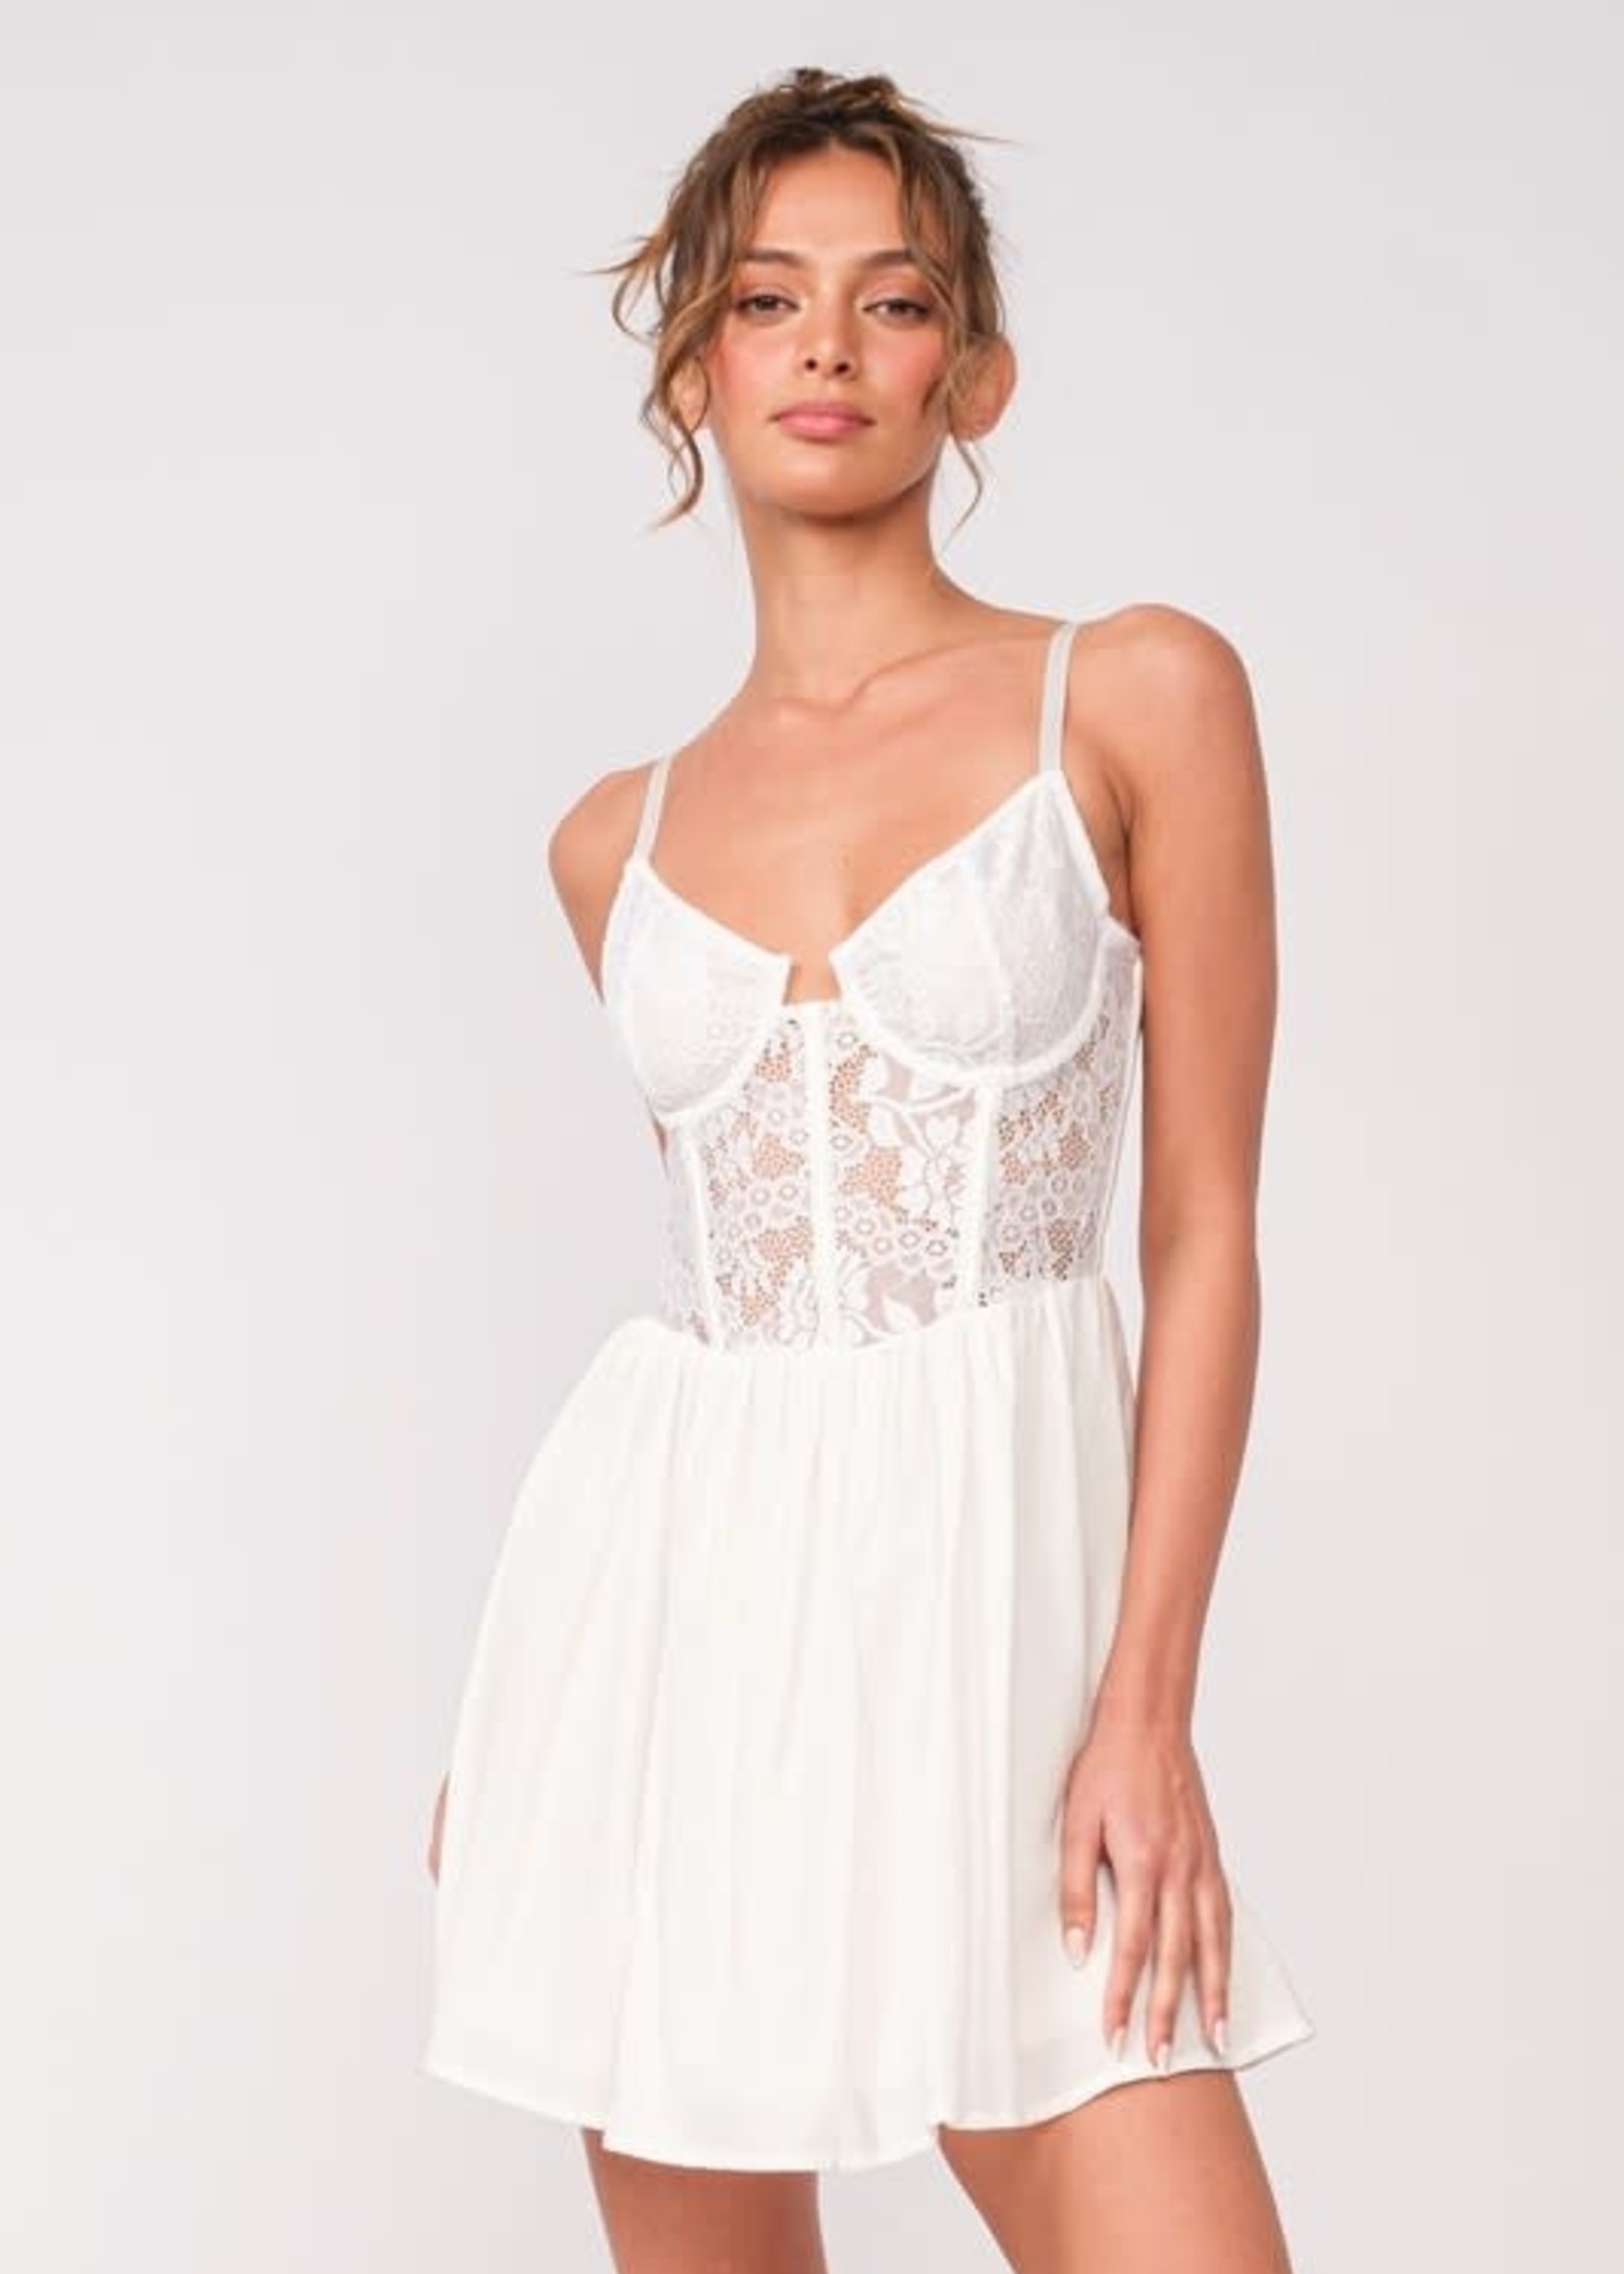 Lace and Pretty White Corset Dress